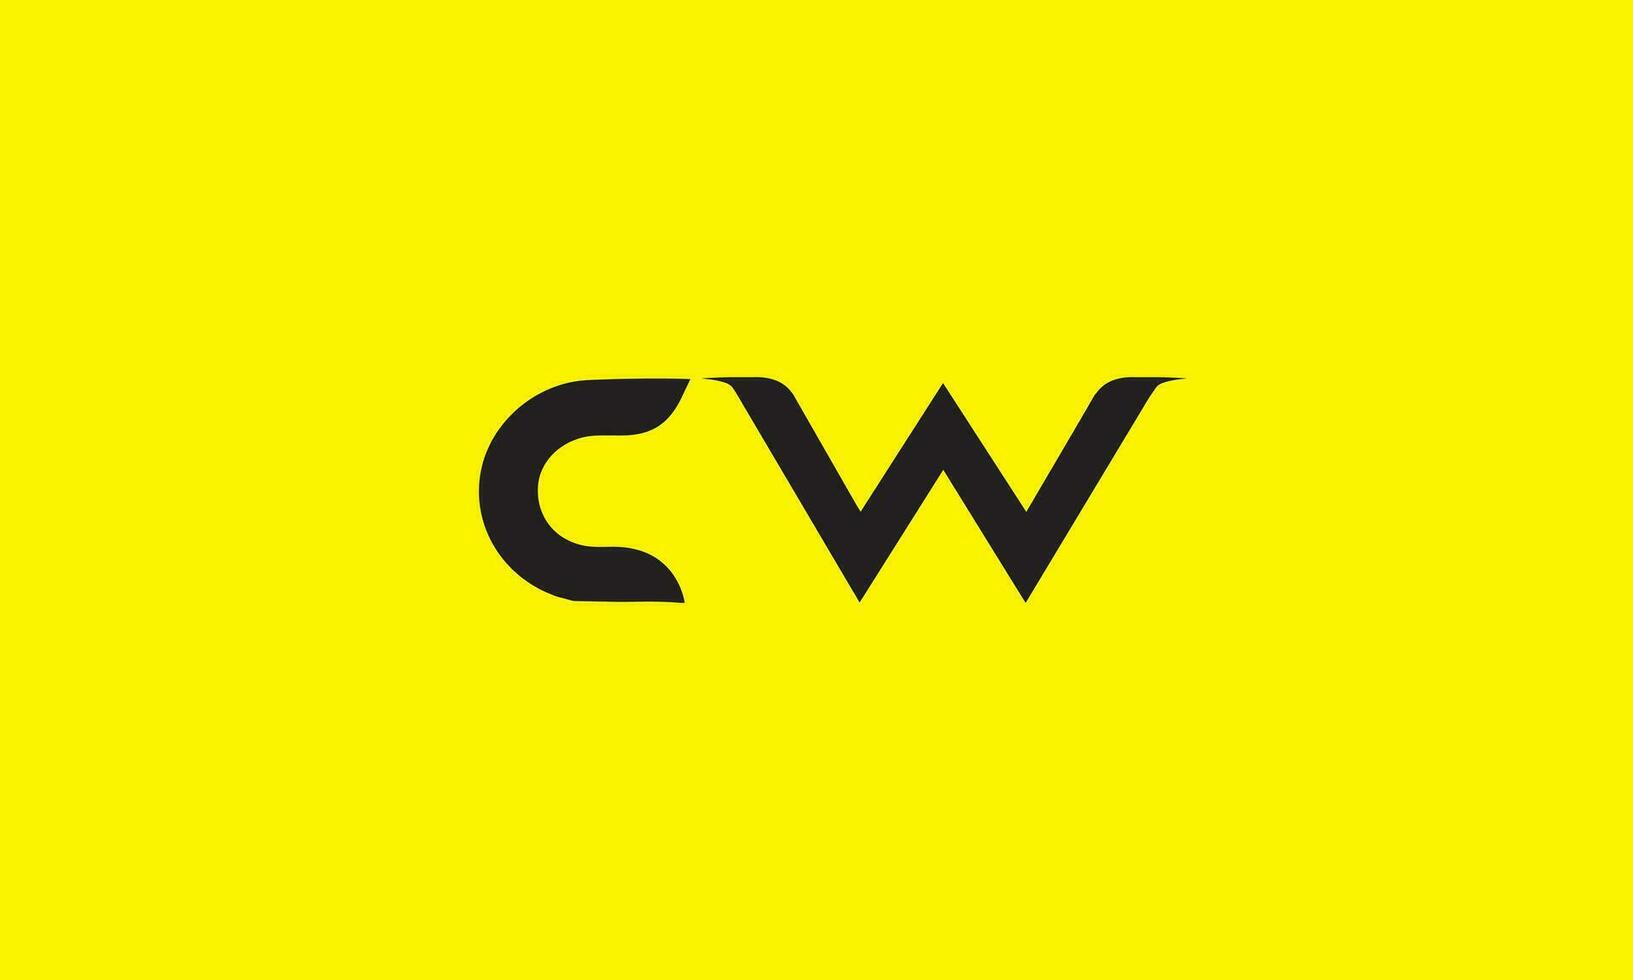 WC or CW alphabet letters monogram icon logo vector